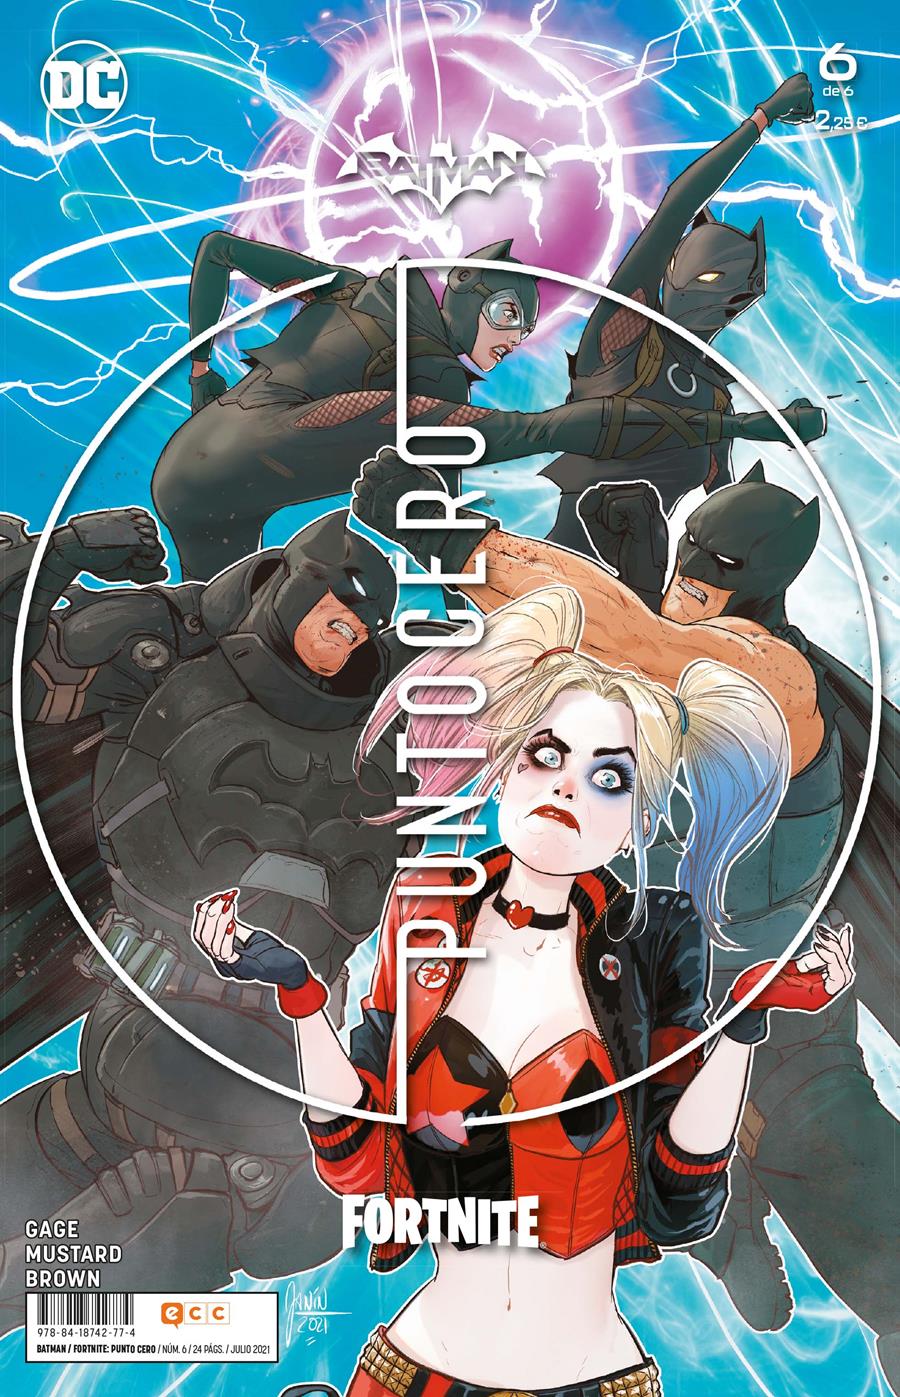 Batman/Fortnite: Punto cero núm. 6 de 6 | N0721-ECC98 | Christos N. Gage, Donald Mustard, Reilly Brown | Terra de Còmic - Tu tienda de cómics online especializada en cómics, manga y merchandising